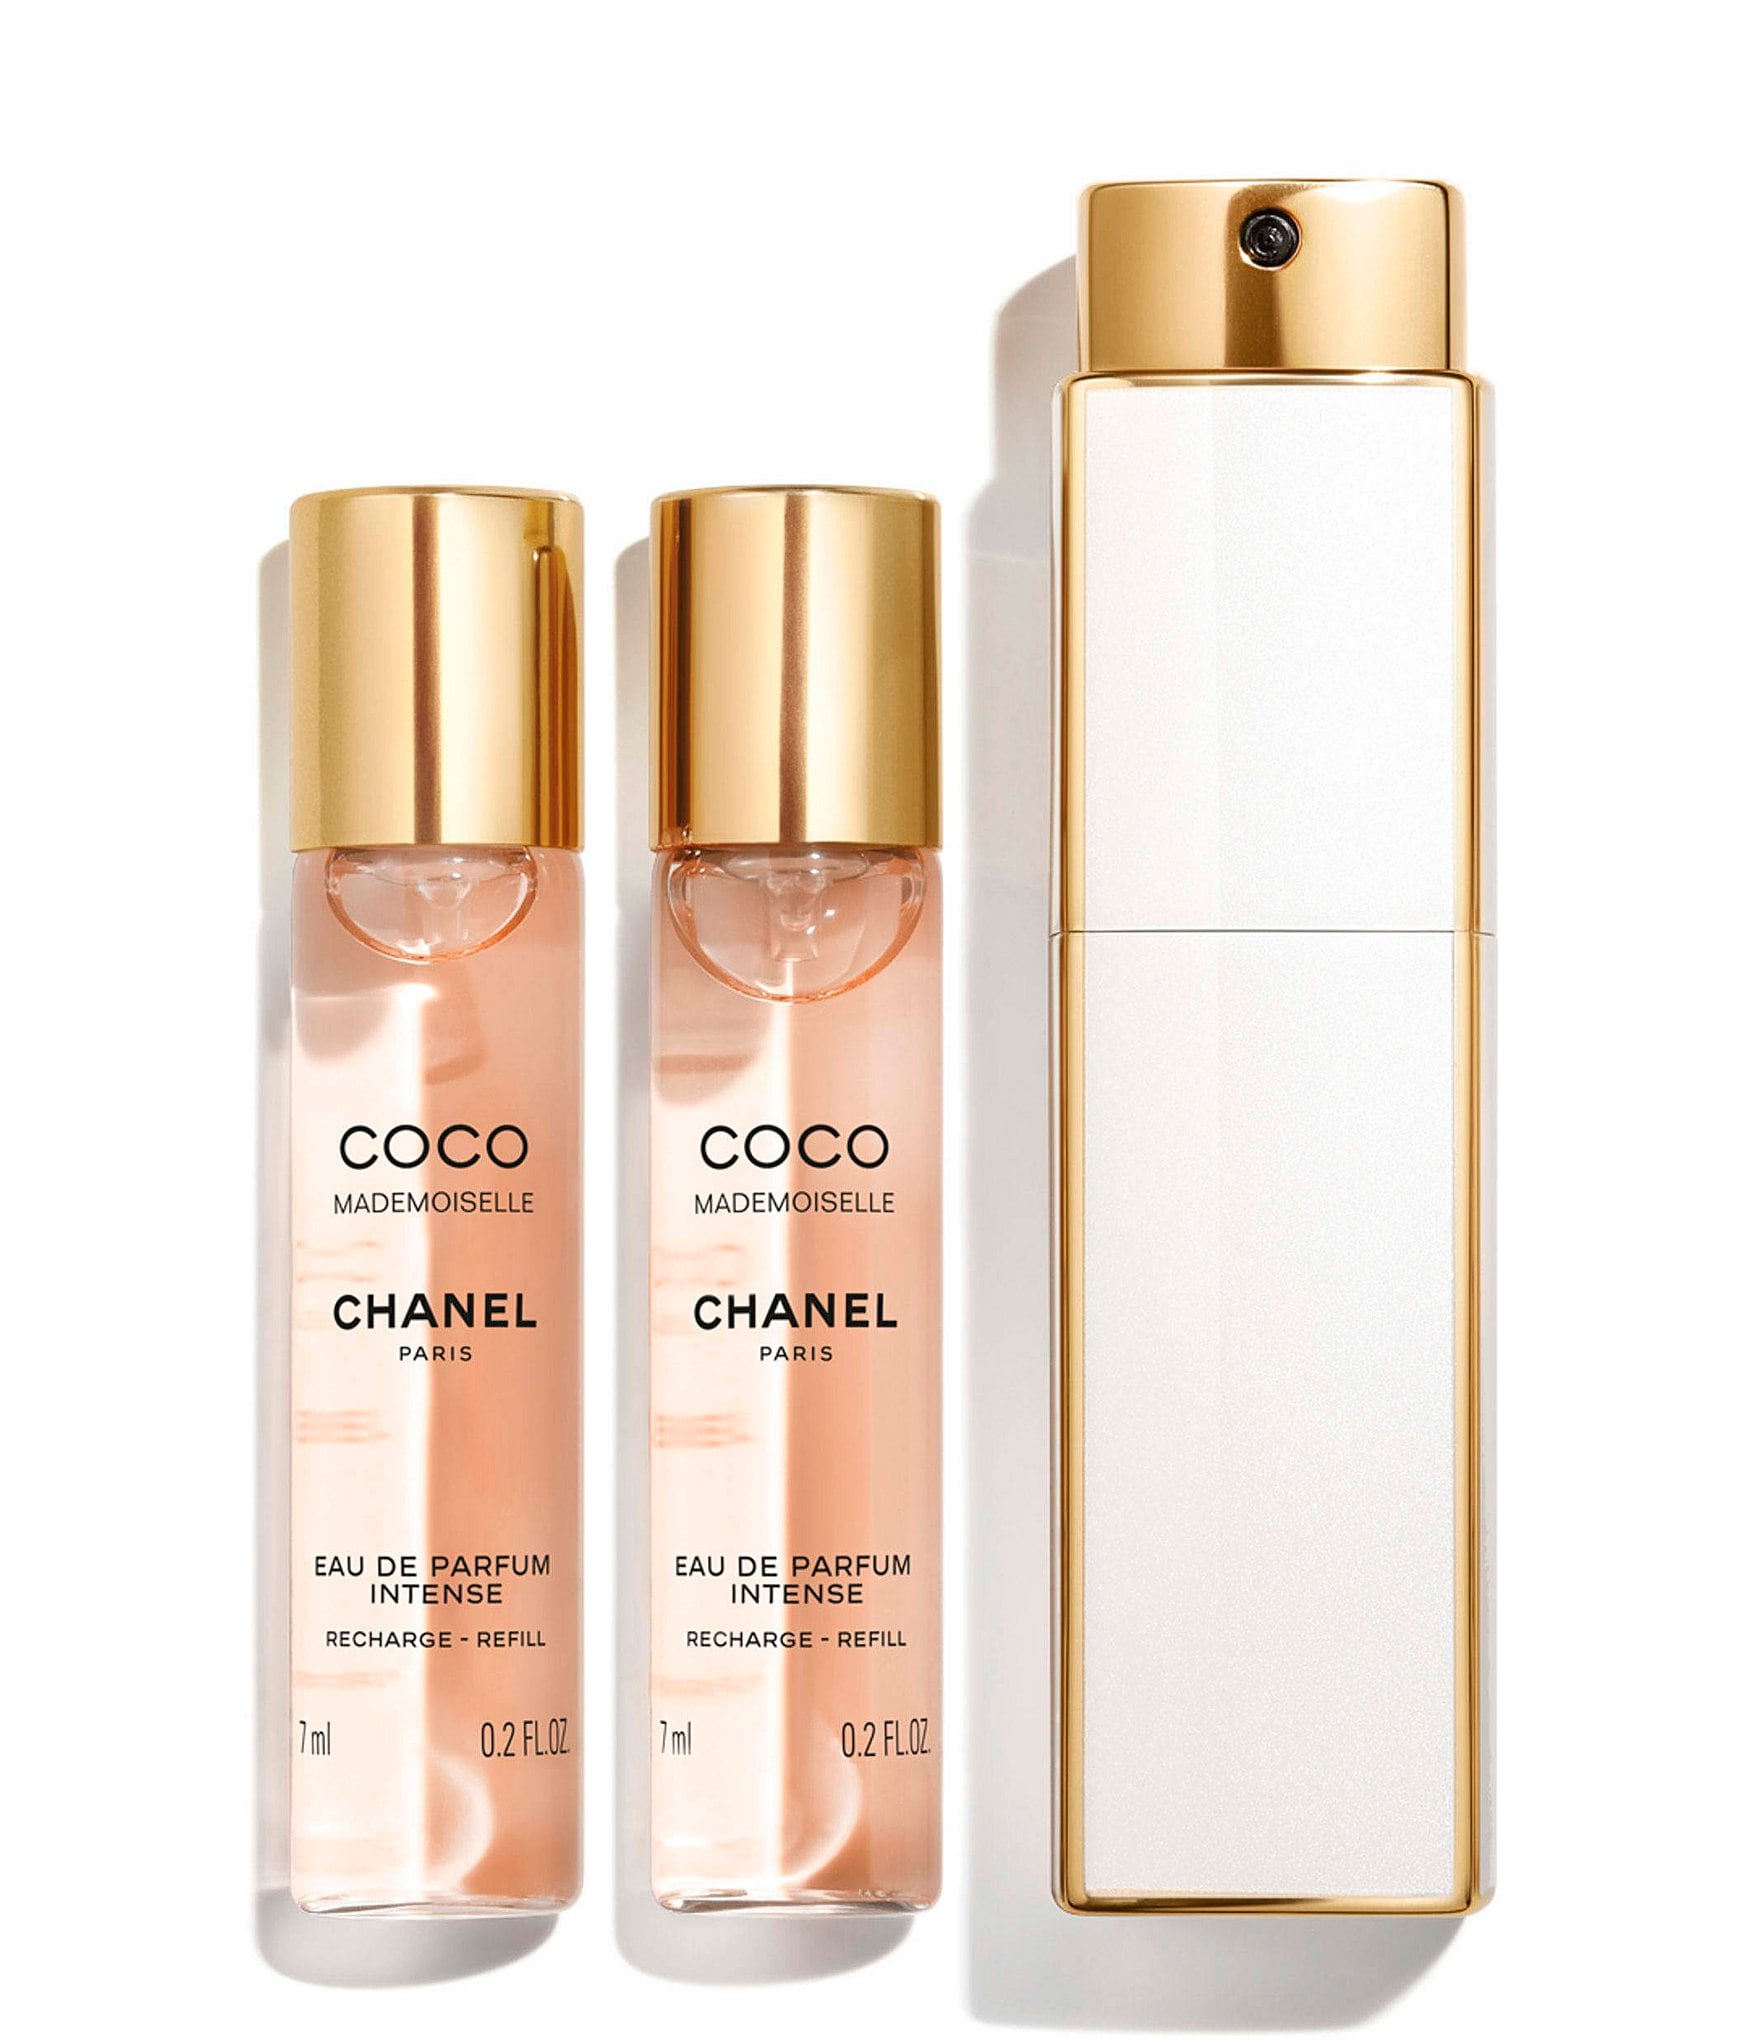 coco chanel mademoiselle perfume 50ml